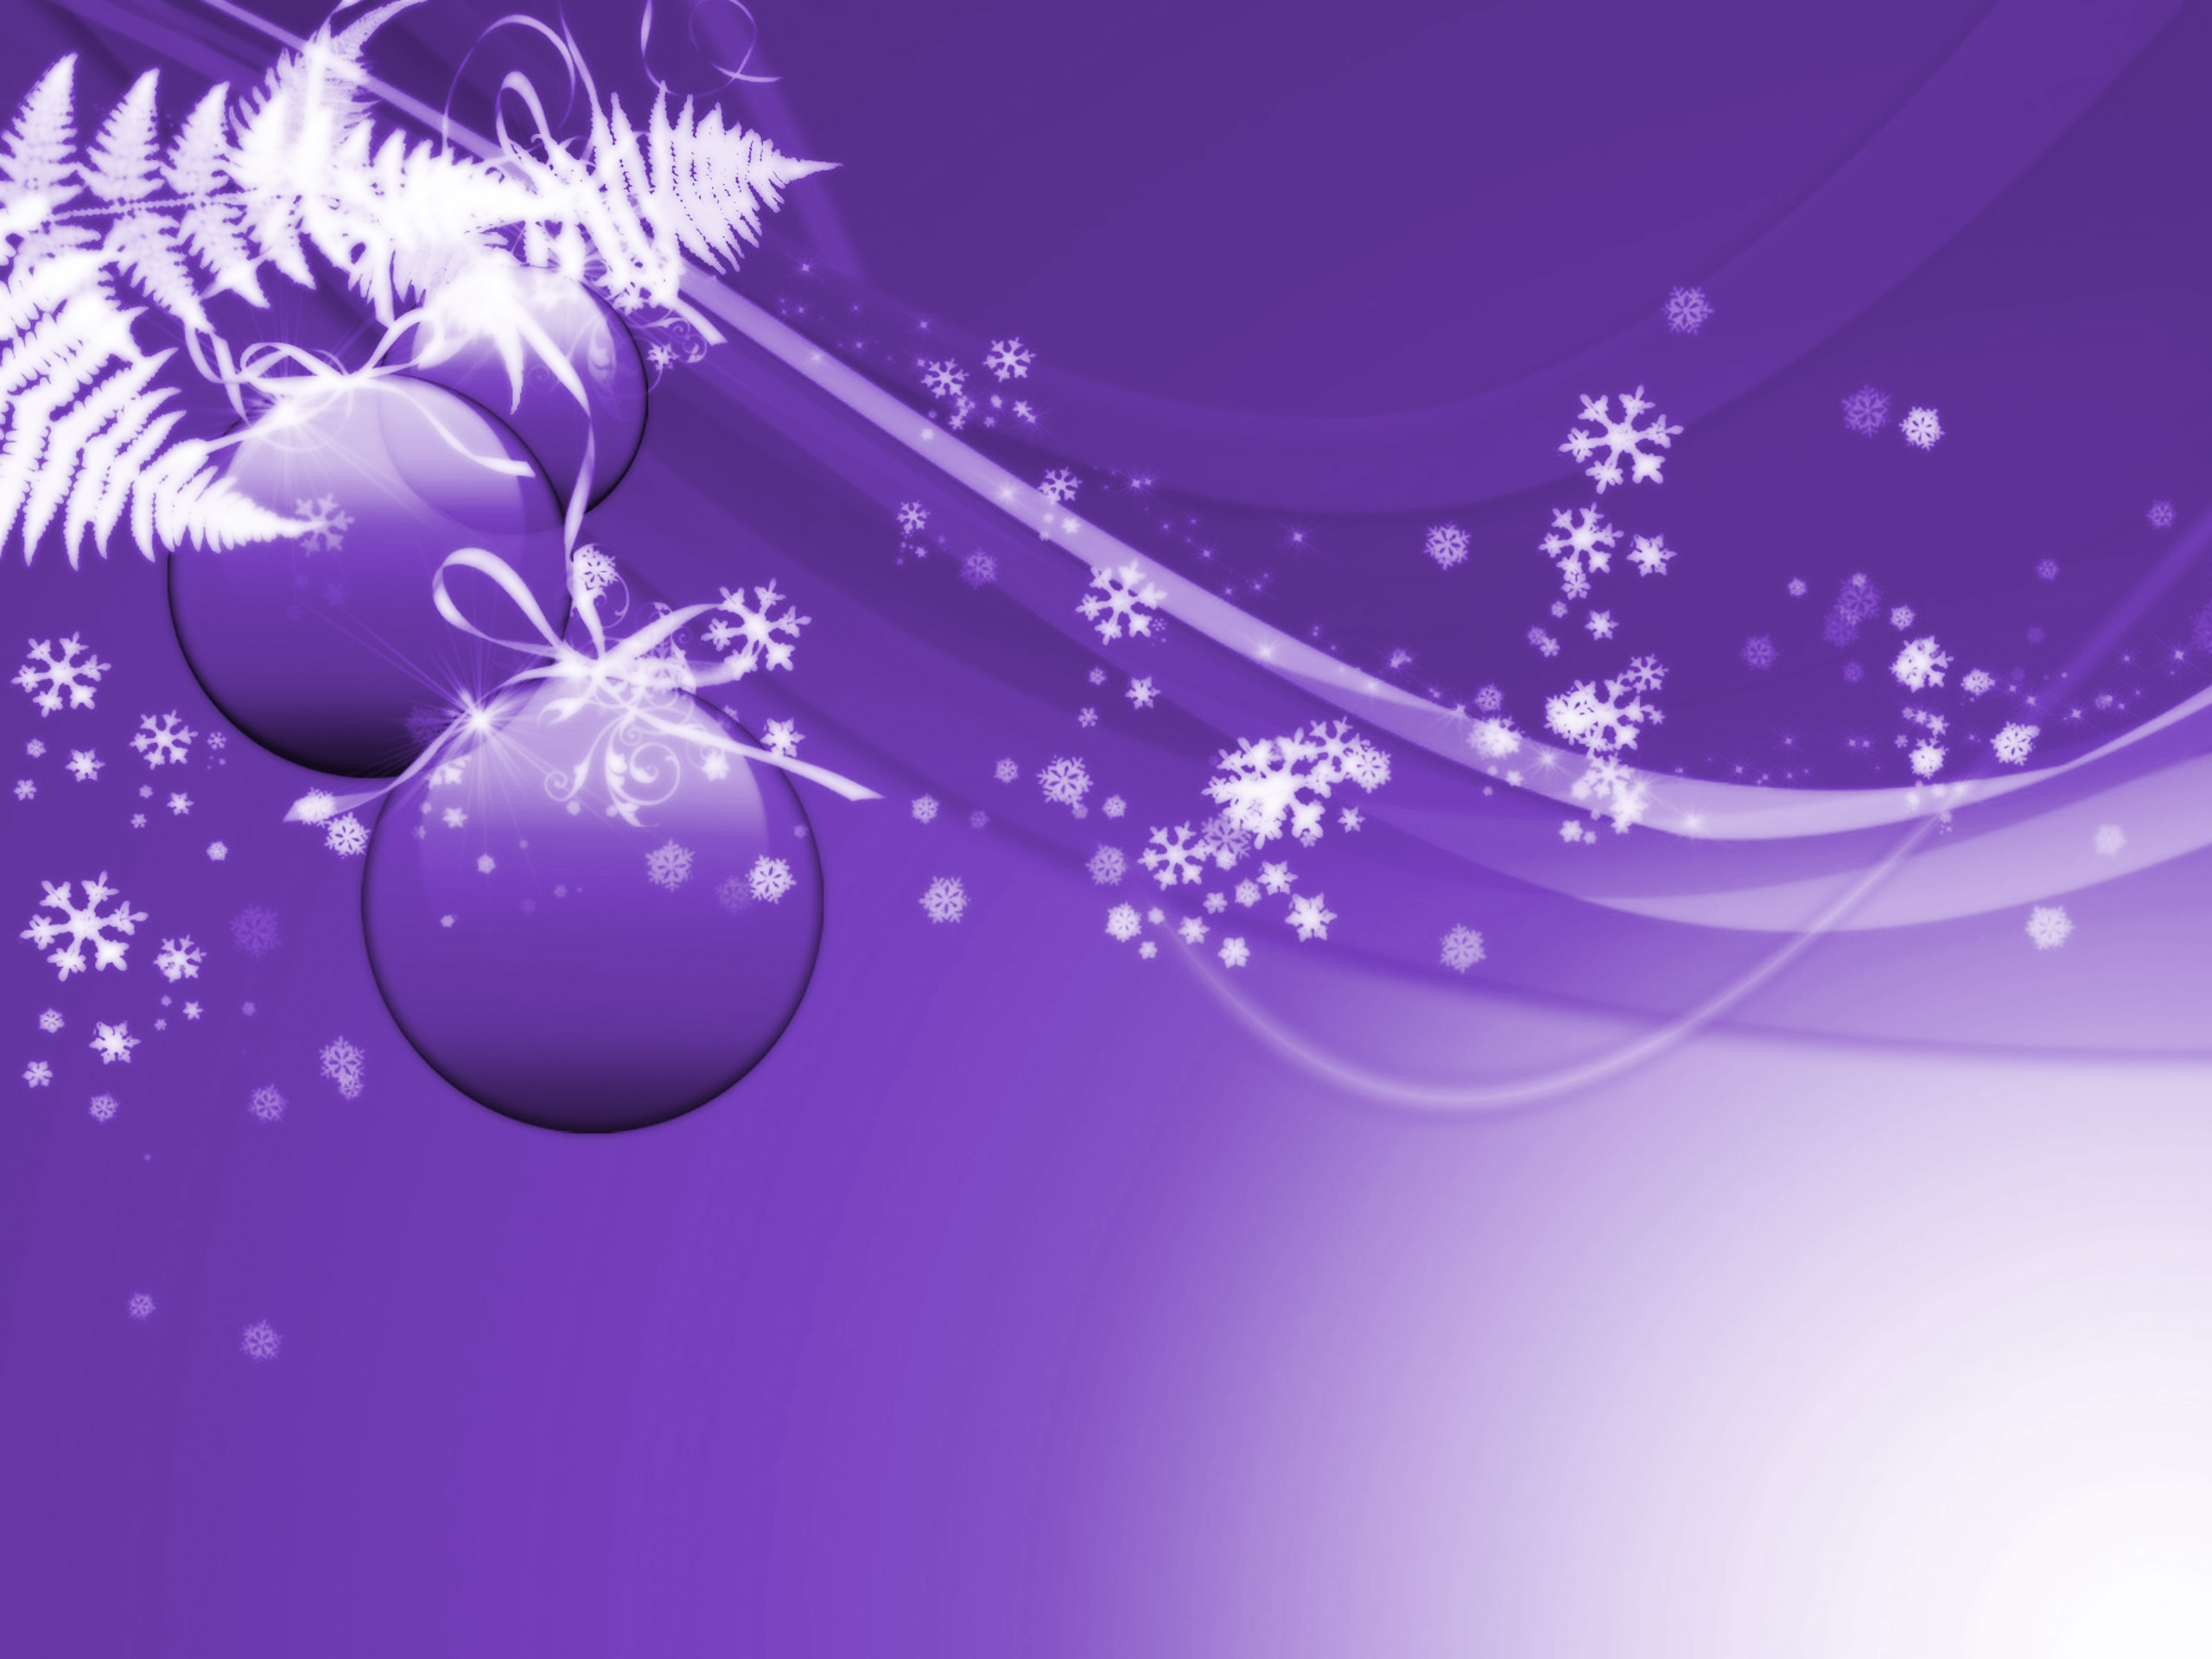 20 Purple Christmas Ornaments Wallpapers  WallpaperSafari